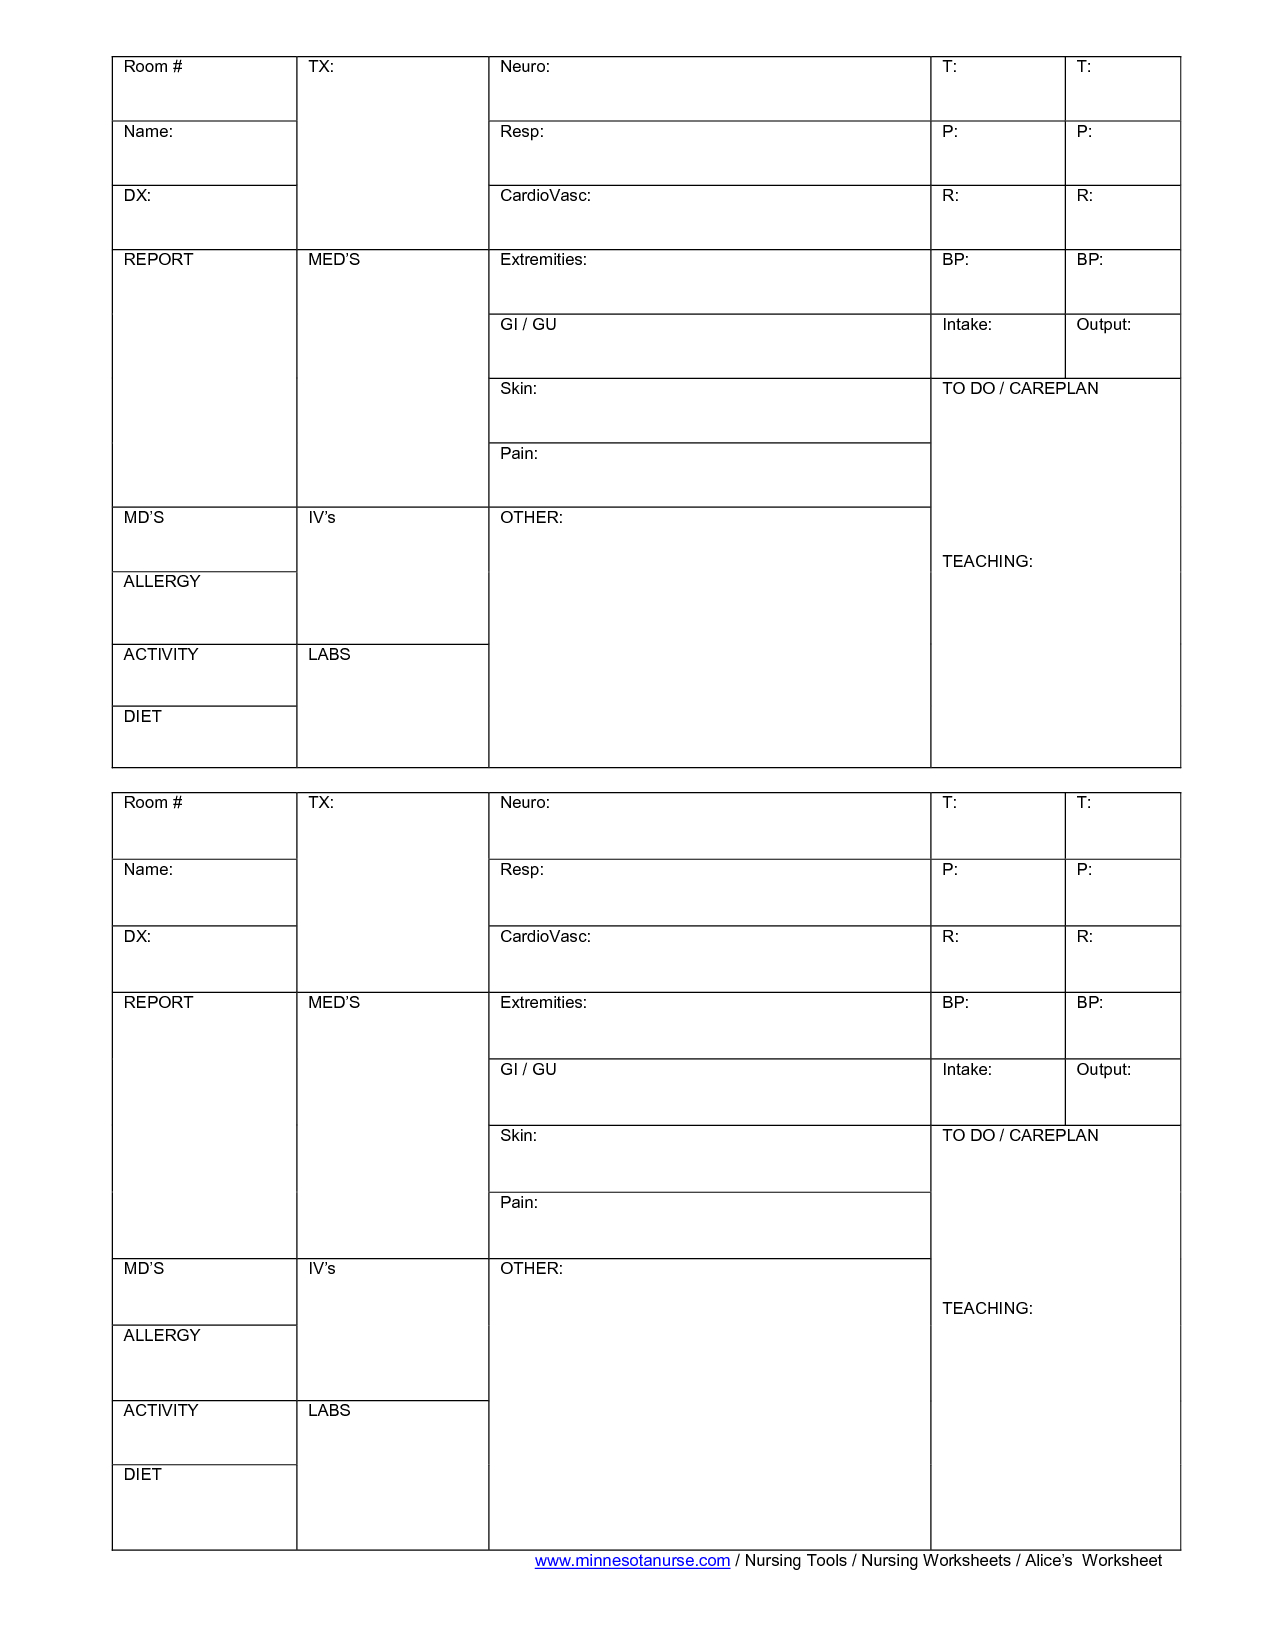 Blank Nursing Report Sheets For Newborns | Nursing Patient Regarding Nursing Report Sheet Template